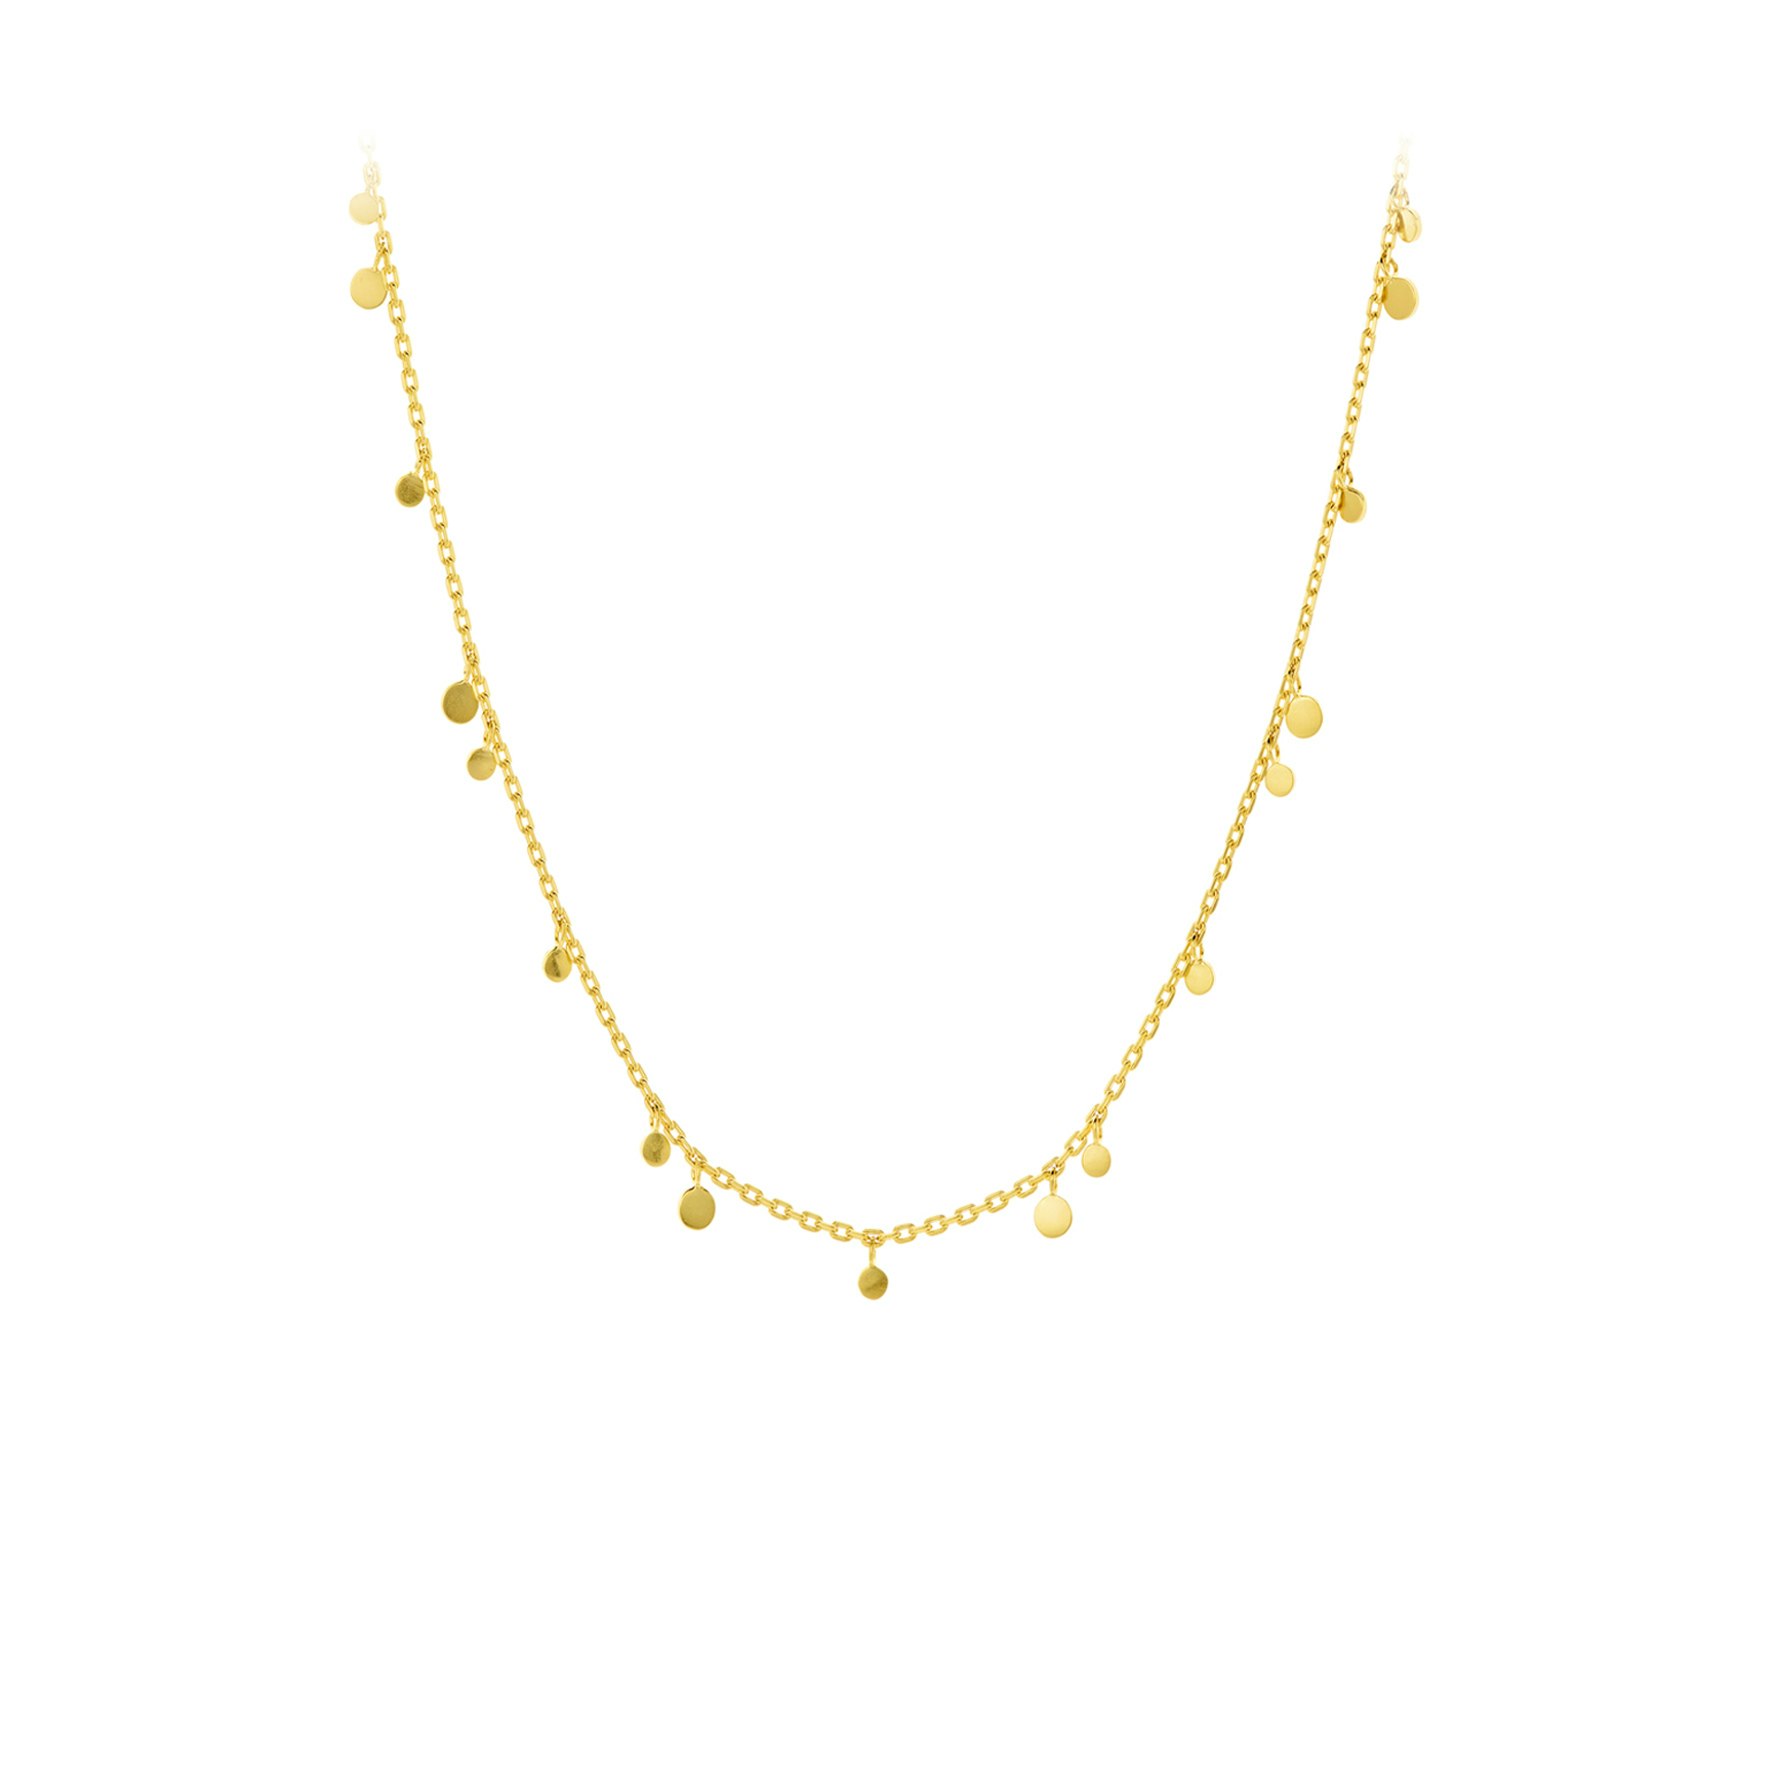 Glow Necklace von Pernille Corydon in Vergoldet-Silber Sterling 925